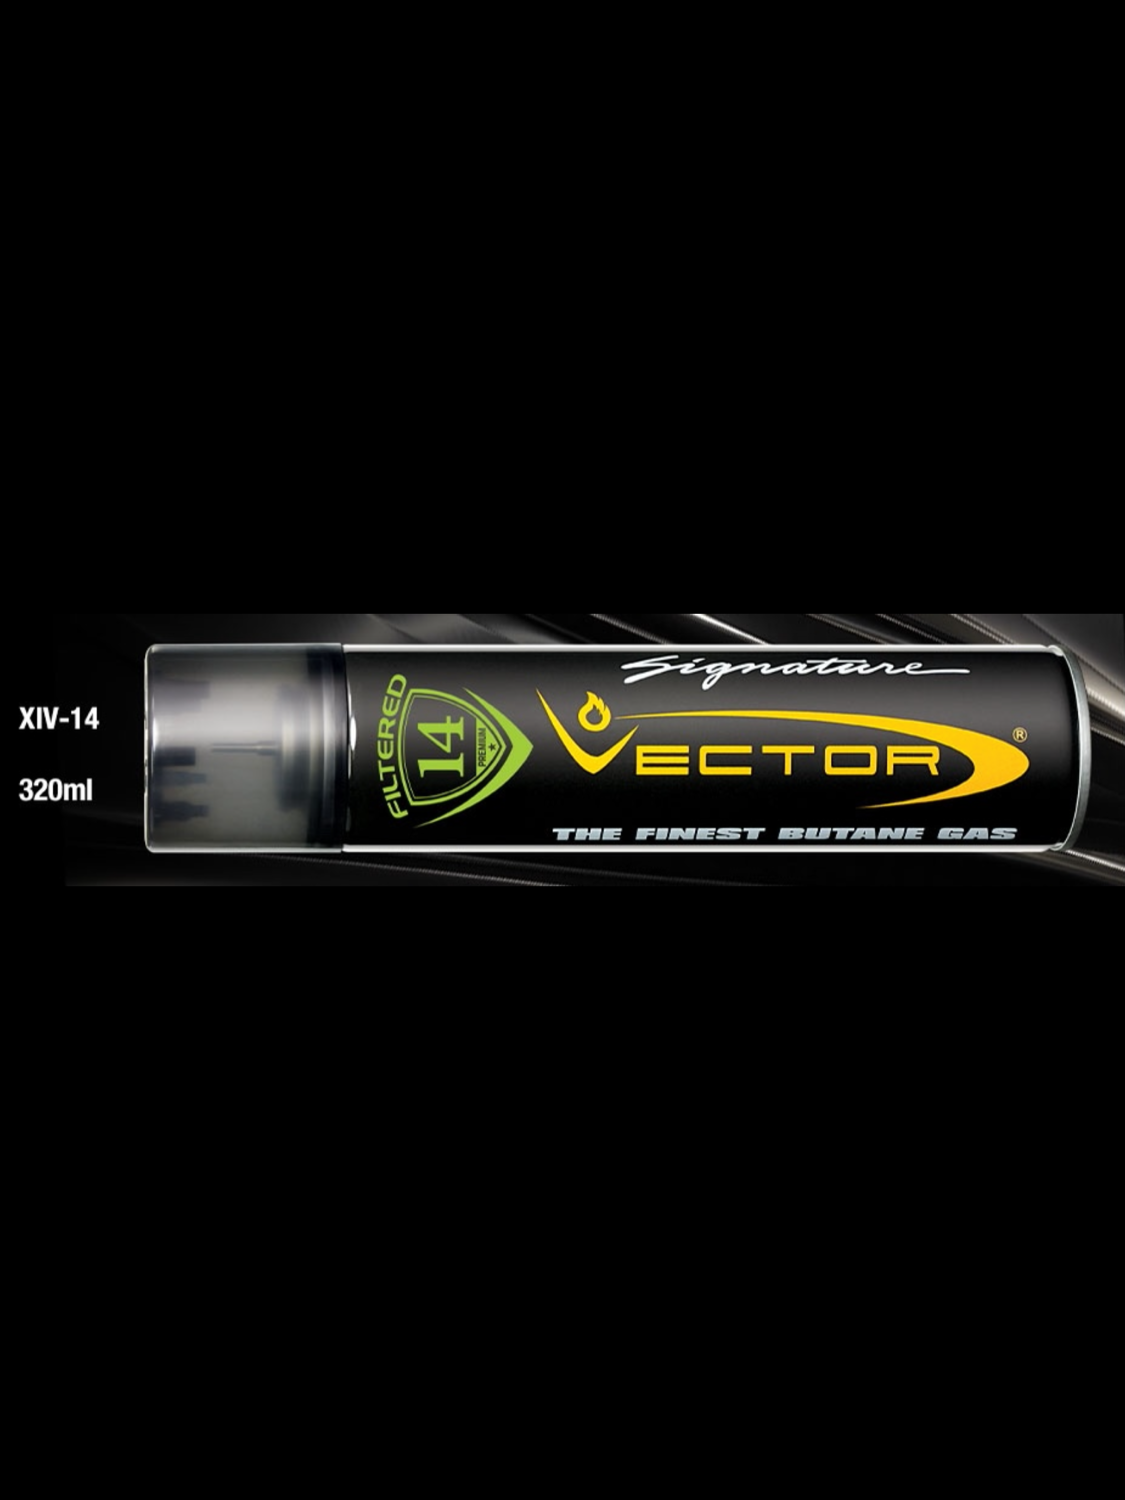 Vector Formula-14 | The Finest Butane Gas | Premium Refined Lighter Fuel - TheSmokeyMcPotz Collection 